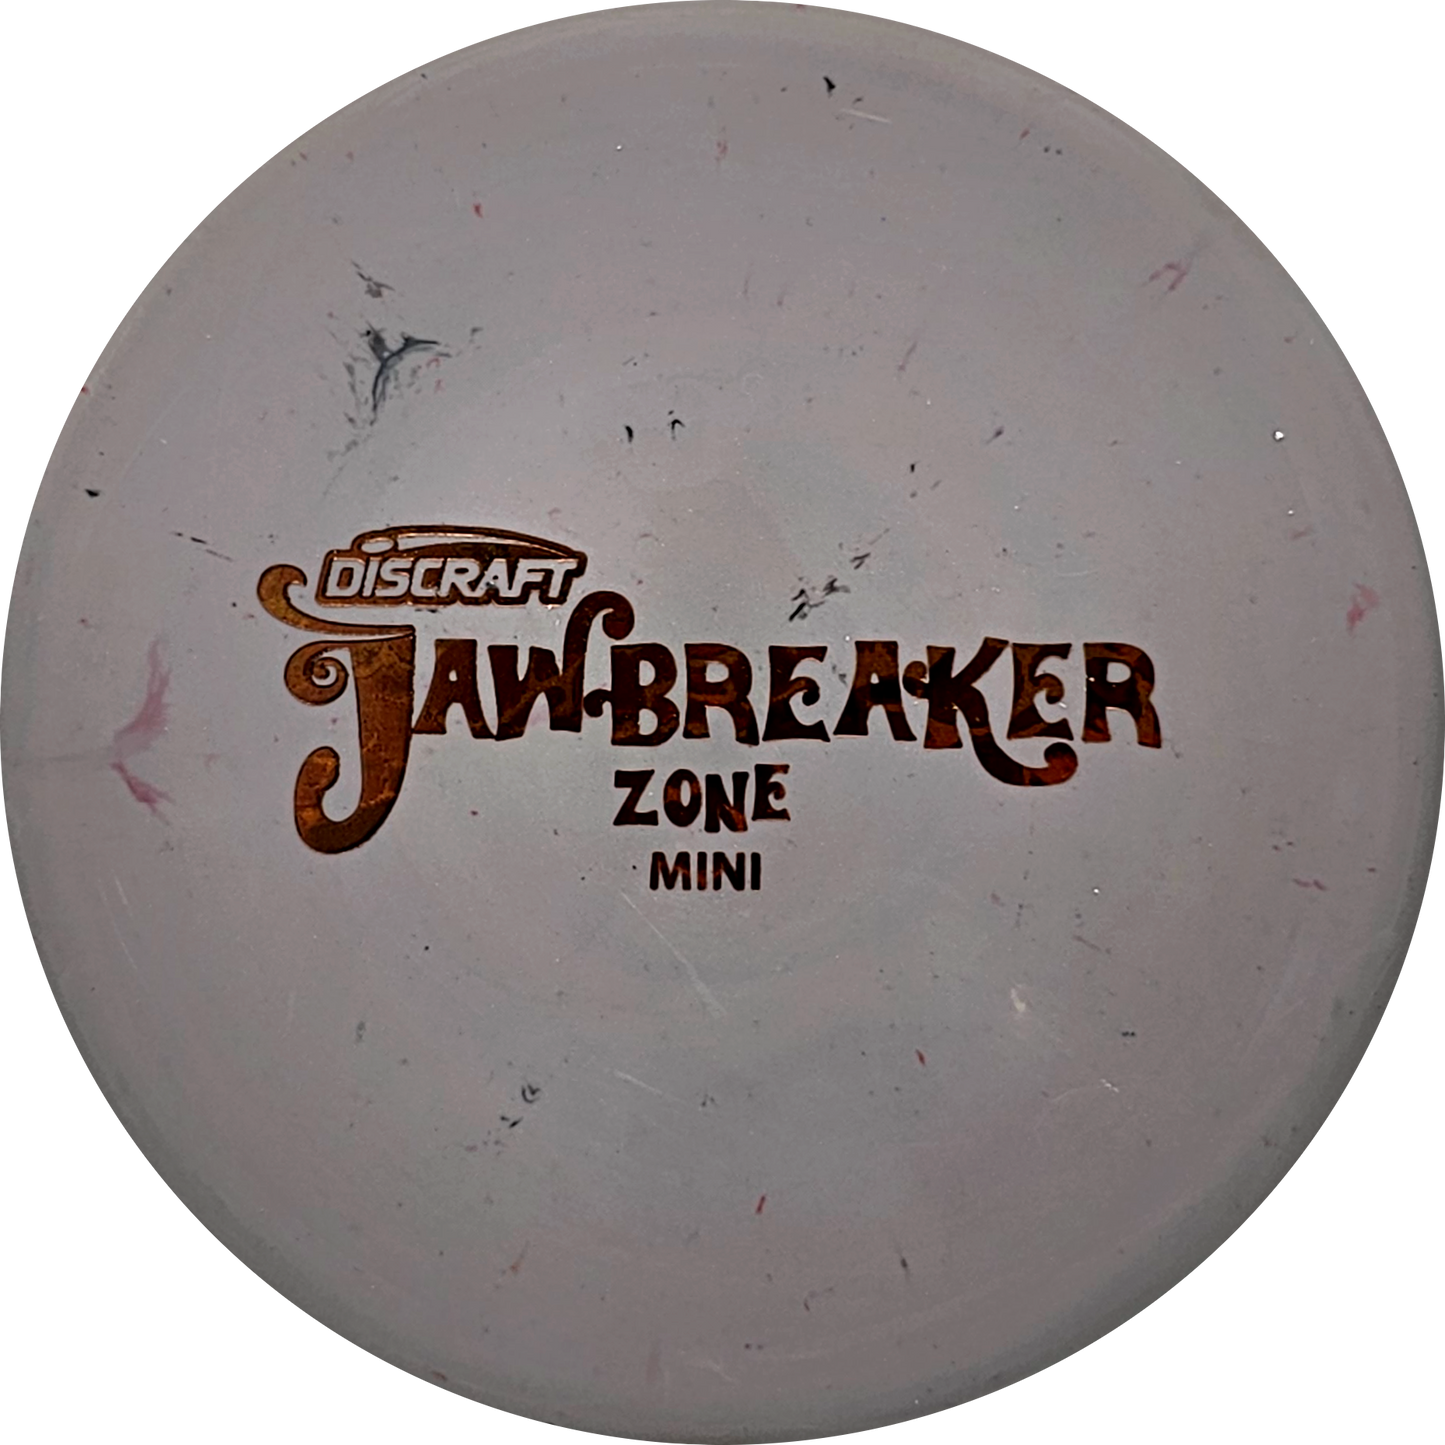 Discraft Jawbreaker Zone - Mini